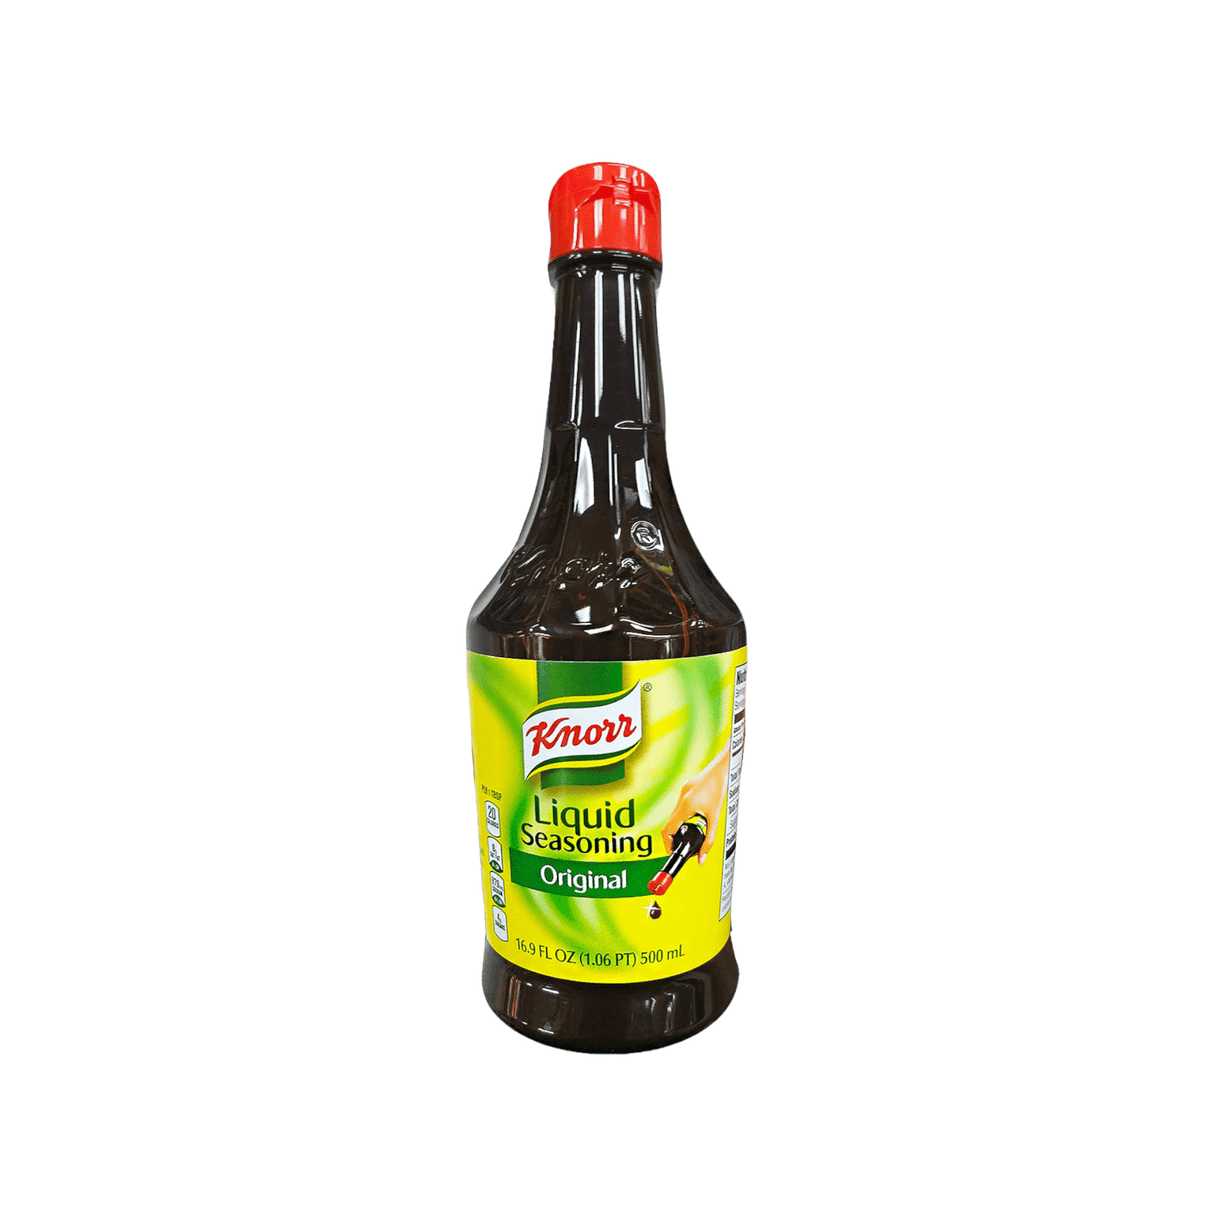 Knorr Liquid Seasoning Original